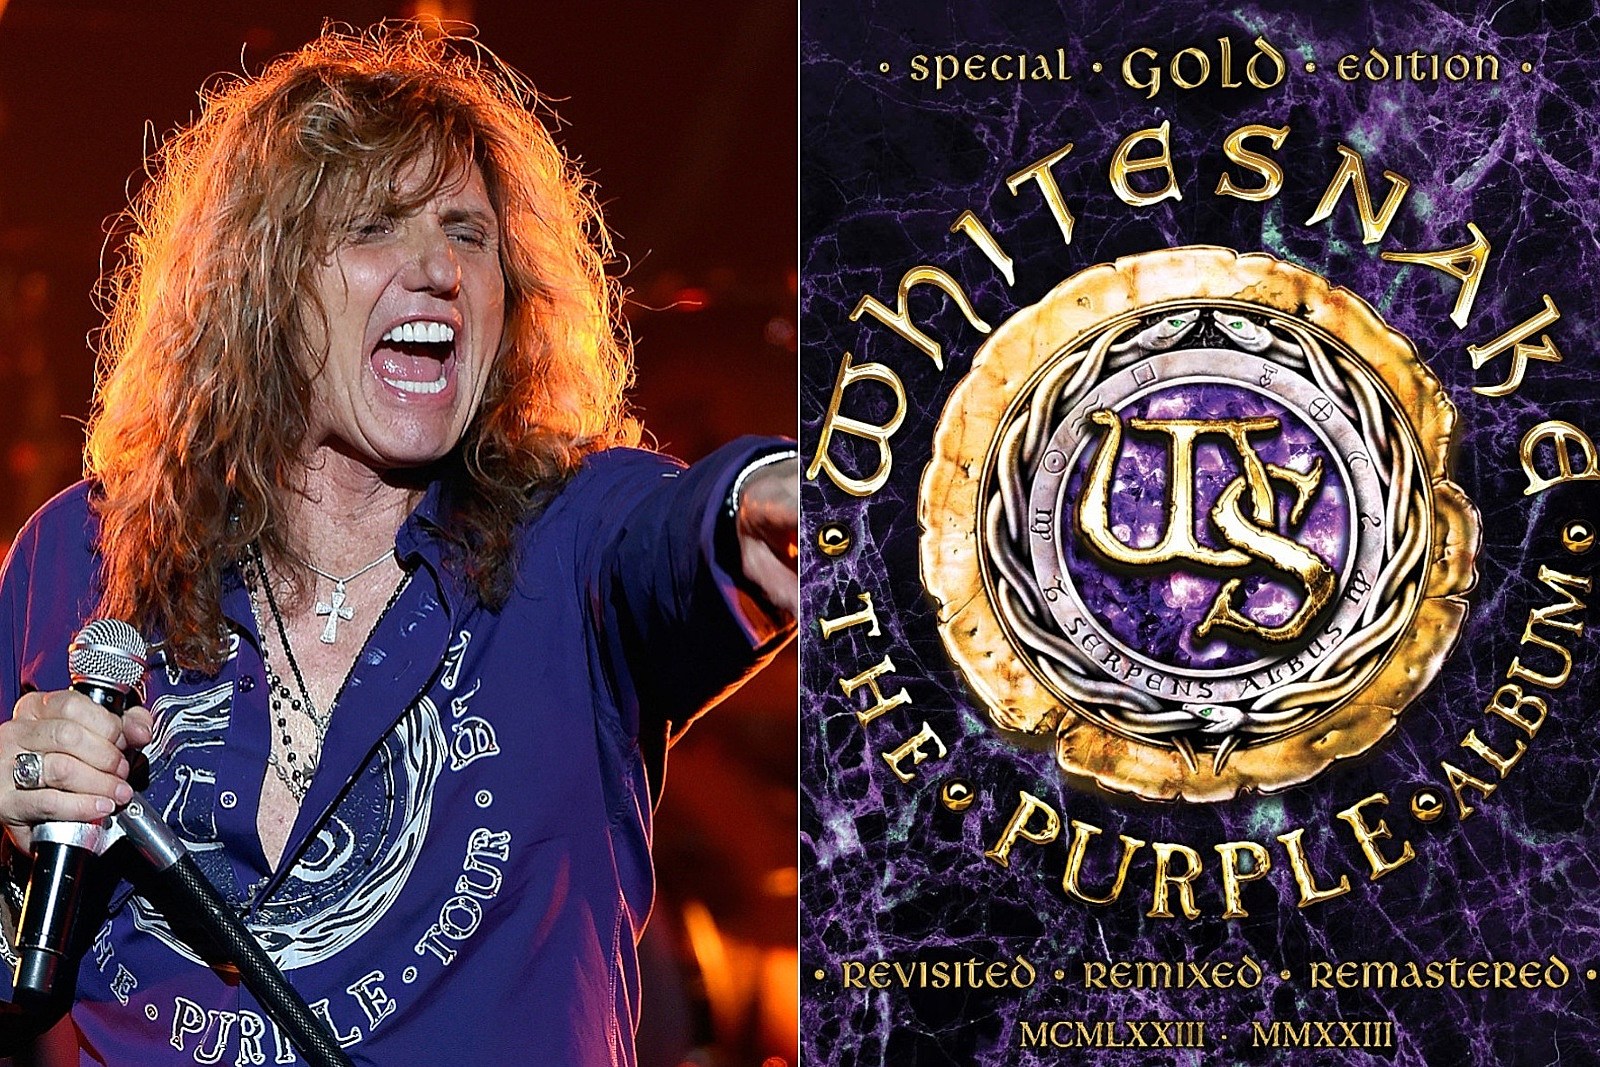 Whitesnake’s ‘Purple Album’ Reissue Includes David Coverdale’s Deep Purple Audition Demo